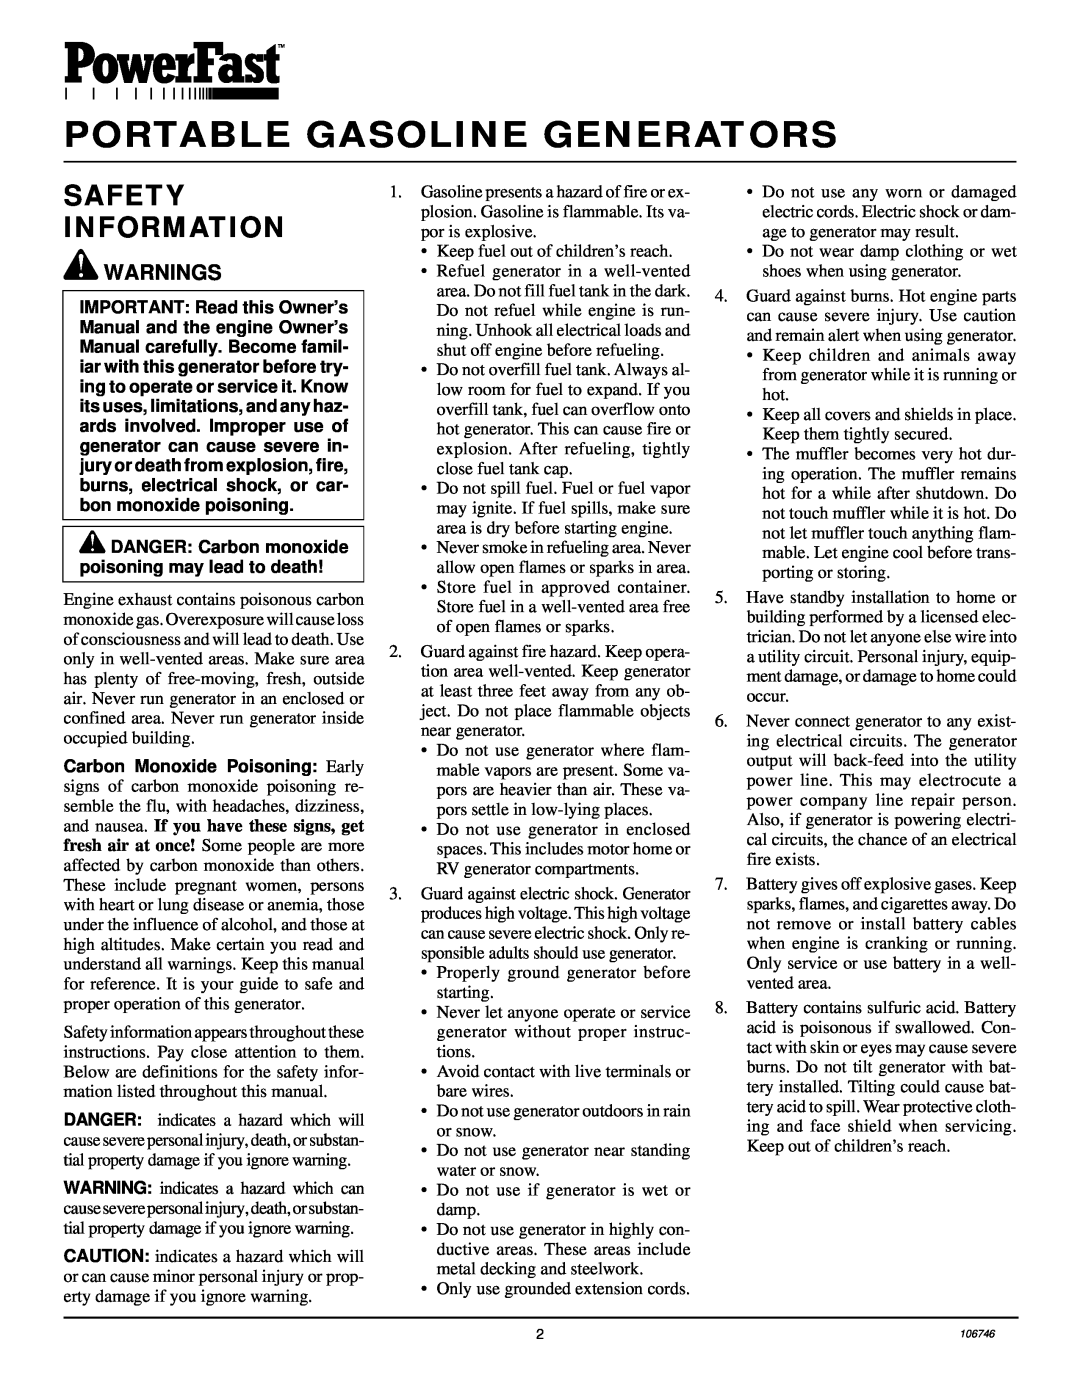 Desa PGH7500IE, PGH1100IE installation manual Portable Gasoline Generators, Safety Information, Warnings 